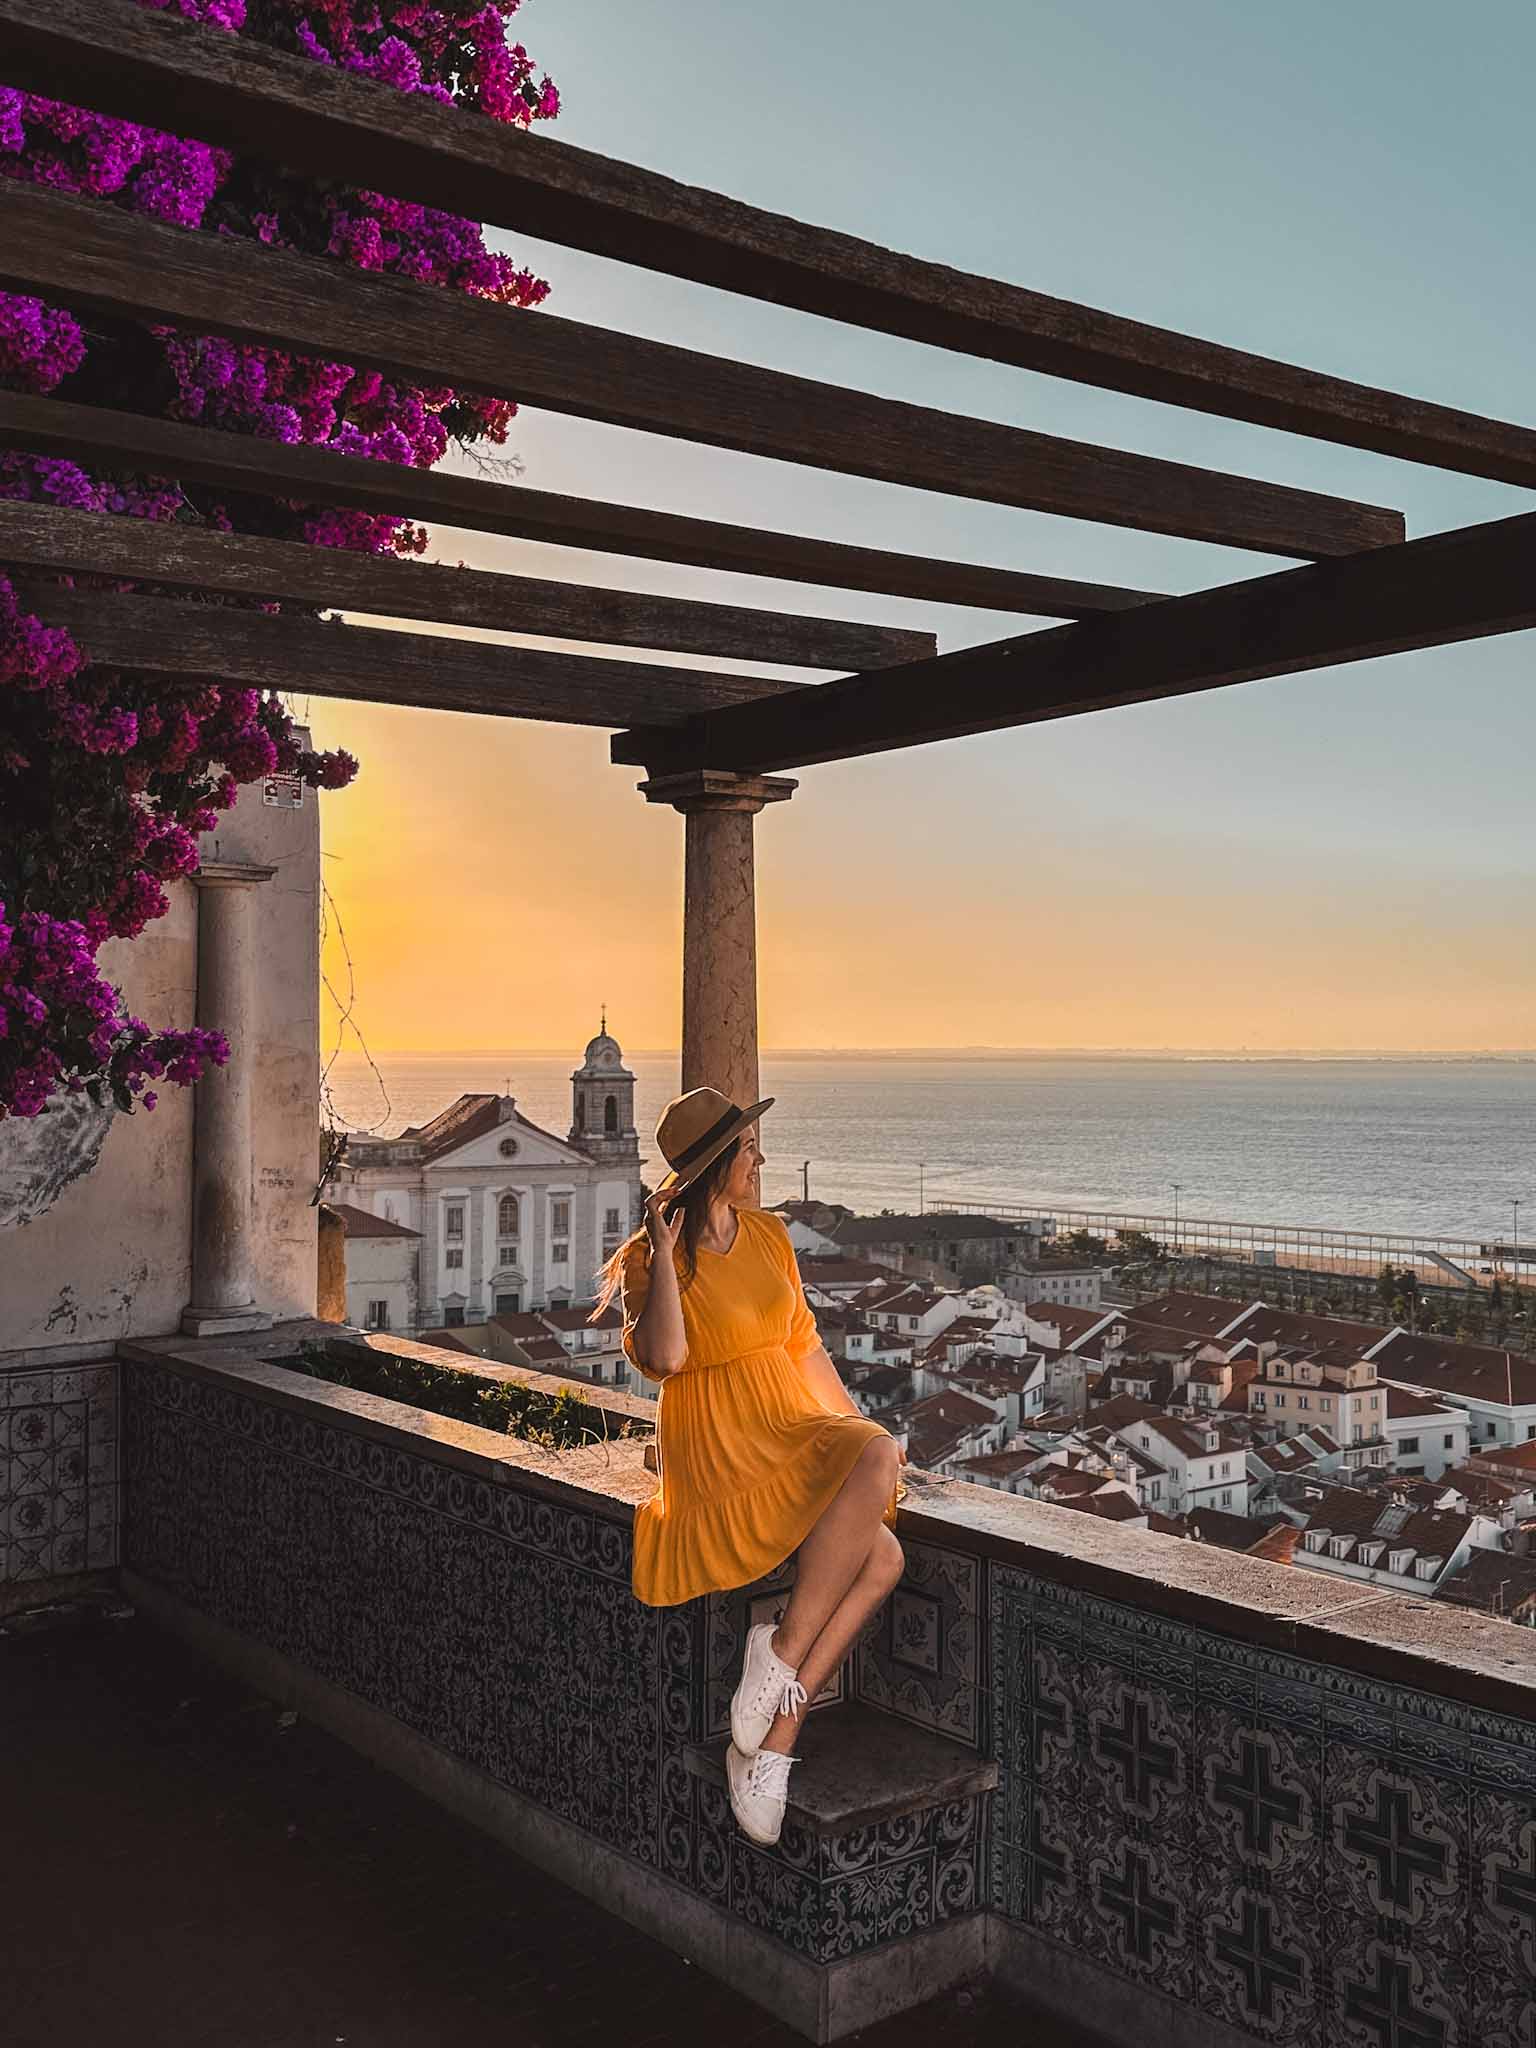 Best viewpoints and rooftops in Lisbon - Miradouro de Santa Luzia